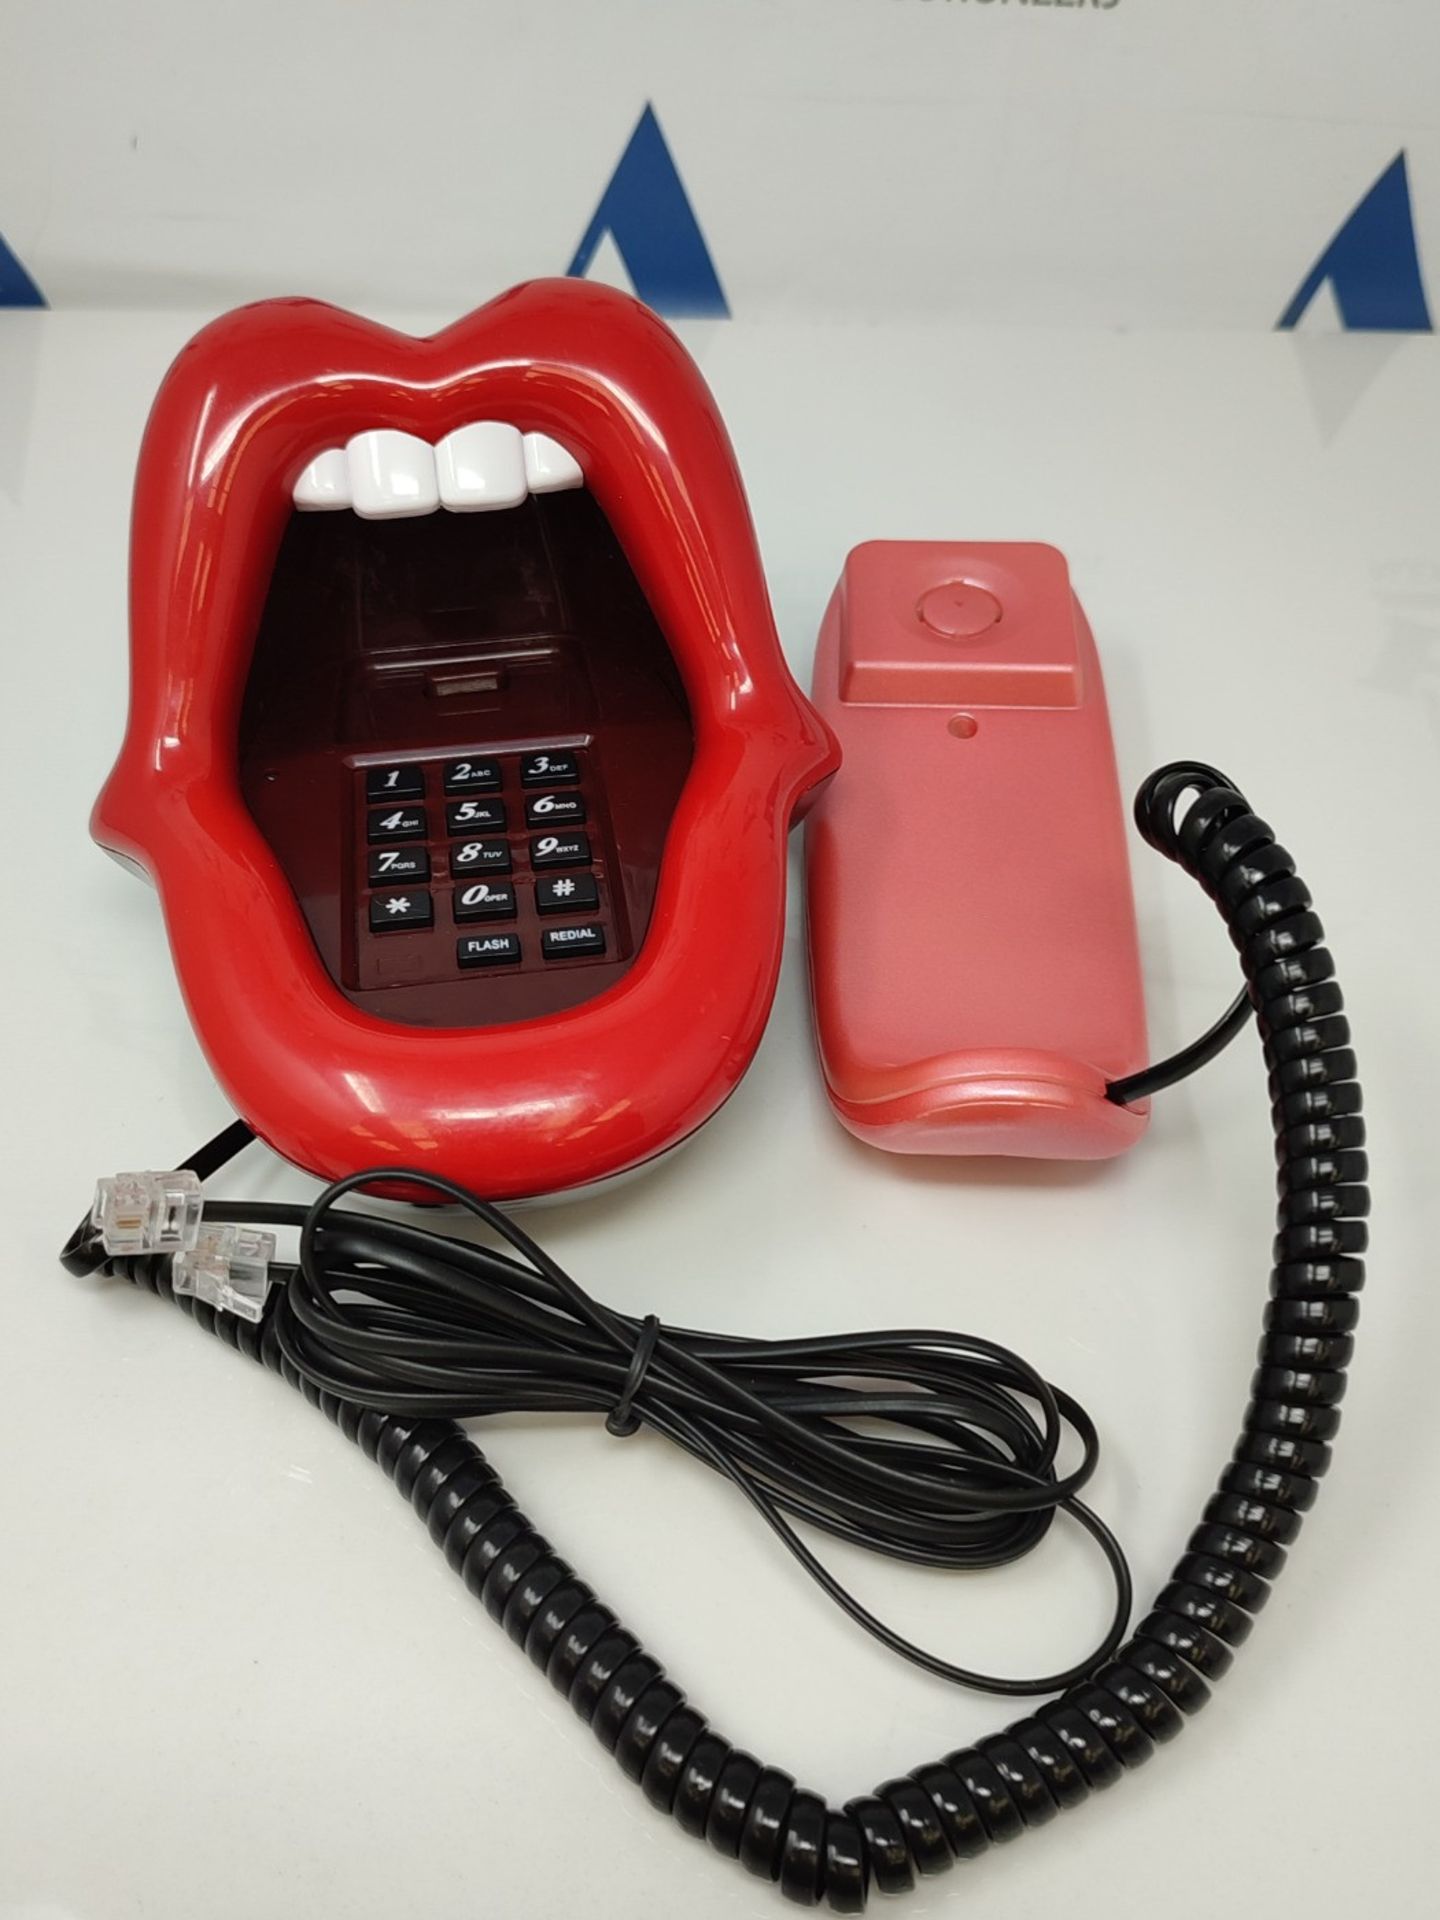 Home landline phones, multifunctional red large tongue-shaped telephone desk telephone - Image 2 of 2